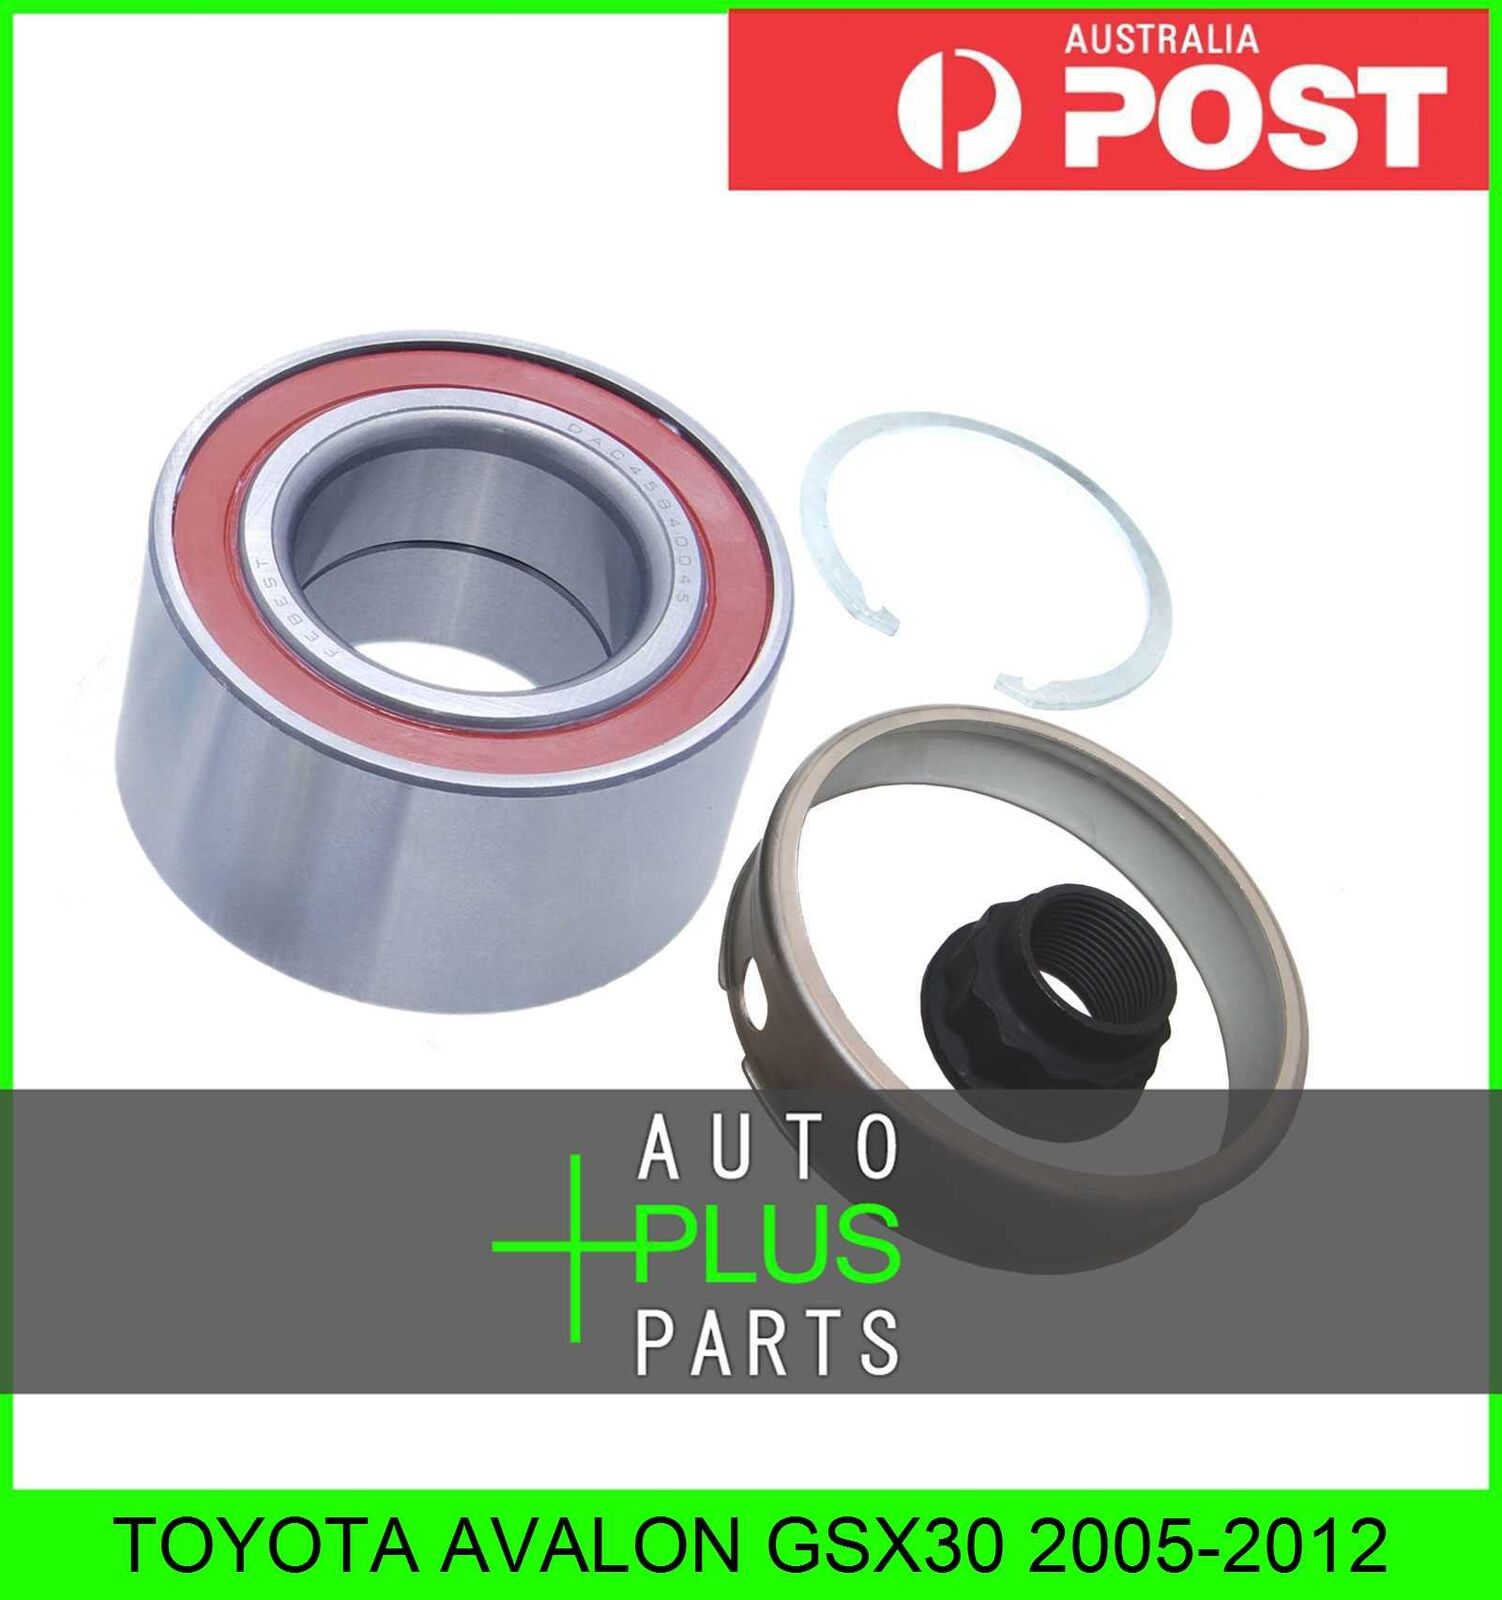 Fits TOYOTA AVALON GSX30 Front Wheel Bearing Repair Kit(Bearing 2 Oil Seal Ring)